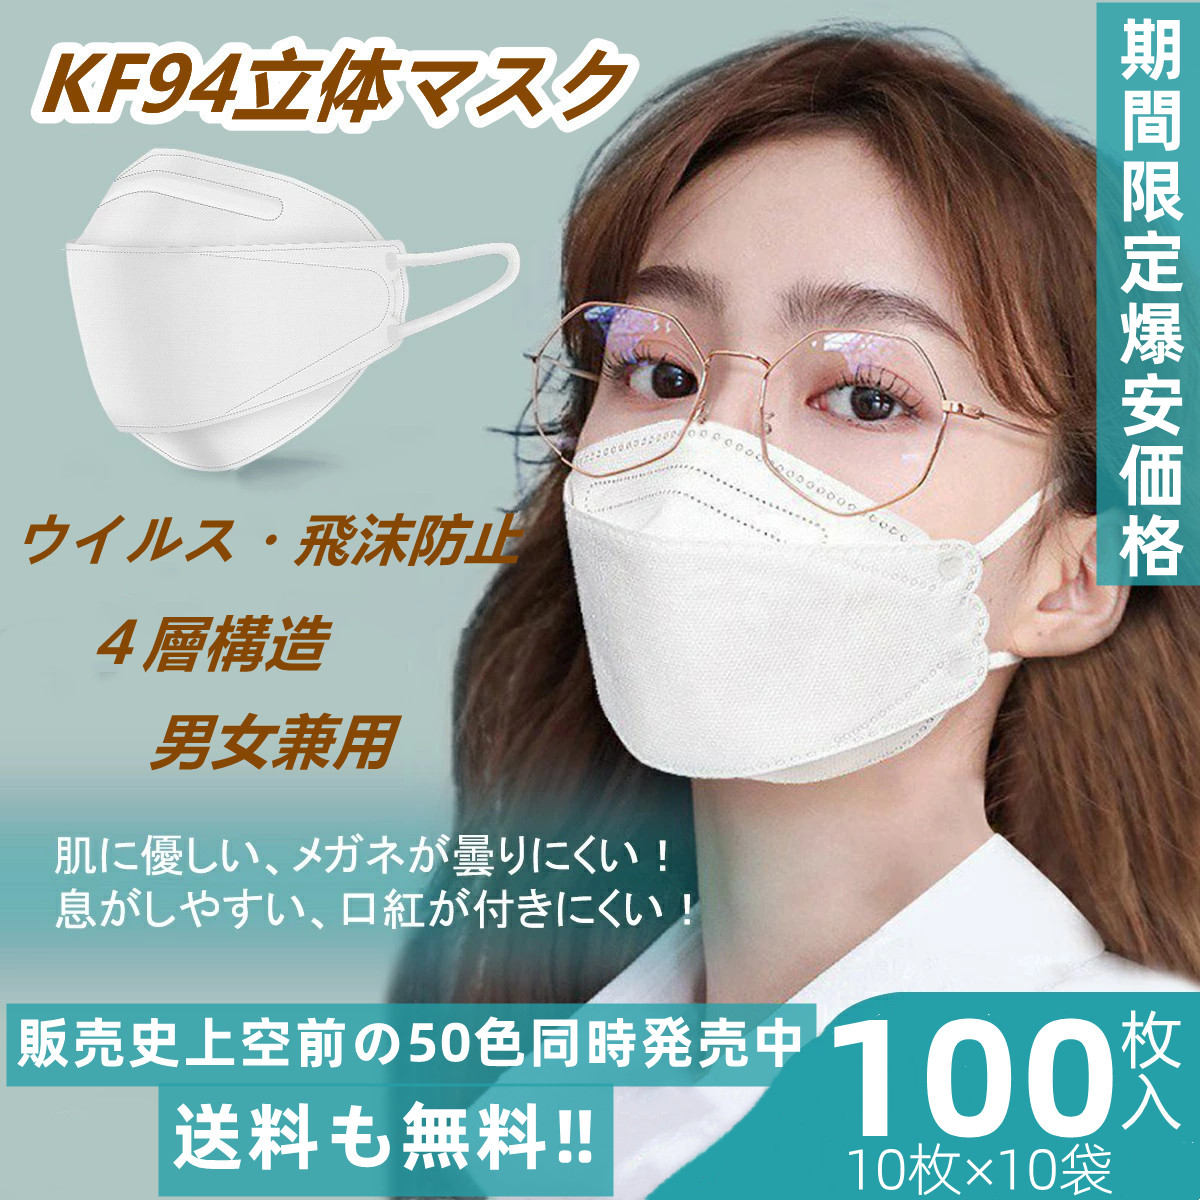 KF94 マスク 100枚 正規品 韓国 不織布 4層フィルター 5箱セット 立体マスク 大きめ 男性 大人用 女性 3Dマスク 呼吸しやすい 個包装 韓国製 防護マスク PM2.5 花粉 超立体 ホワイト  高級マスク FLAX ブランド 送料無料